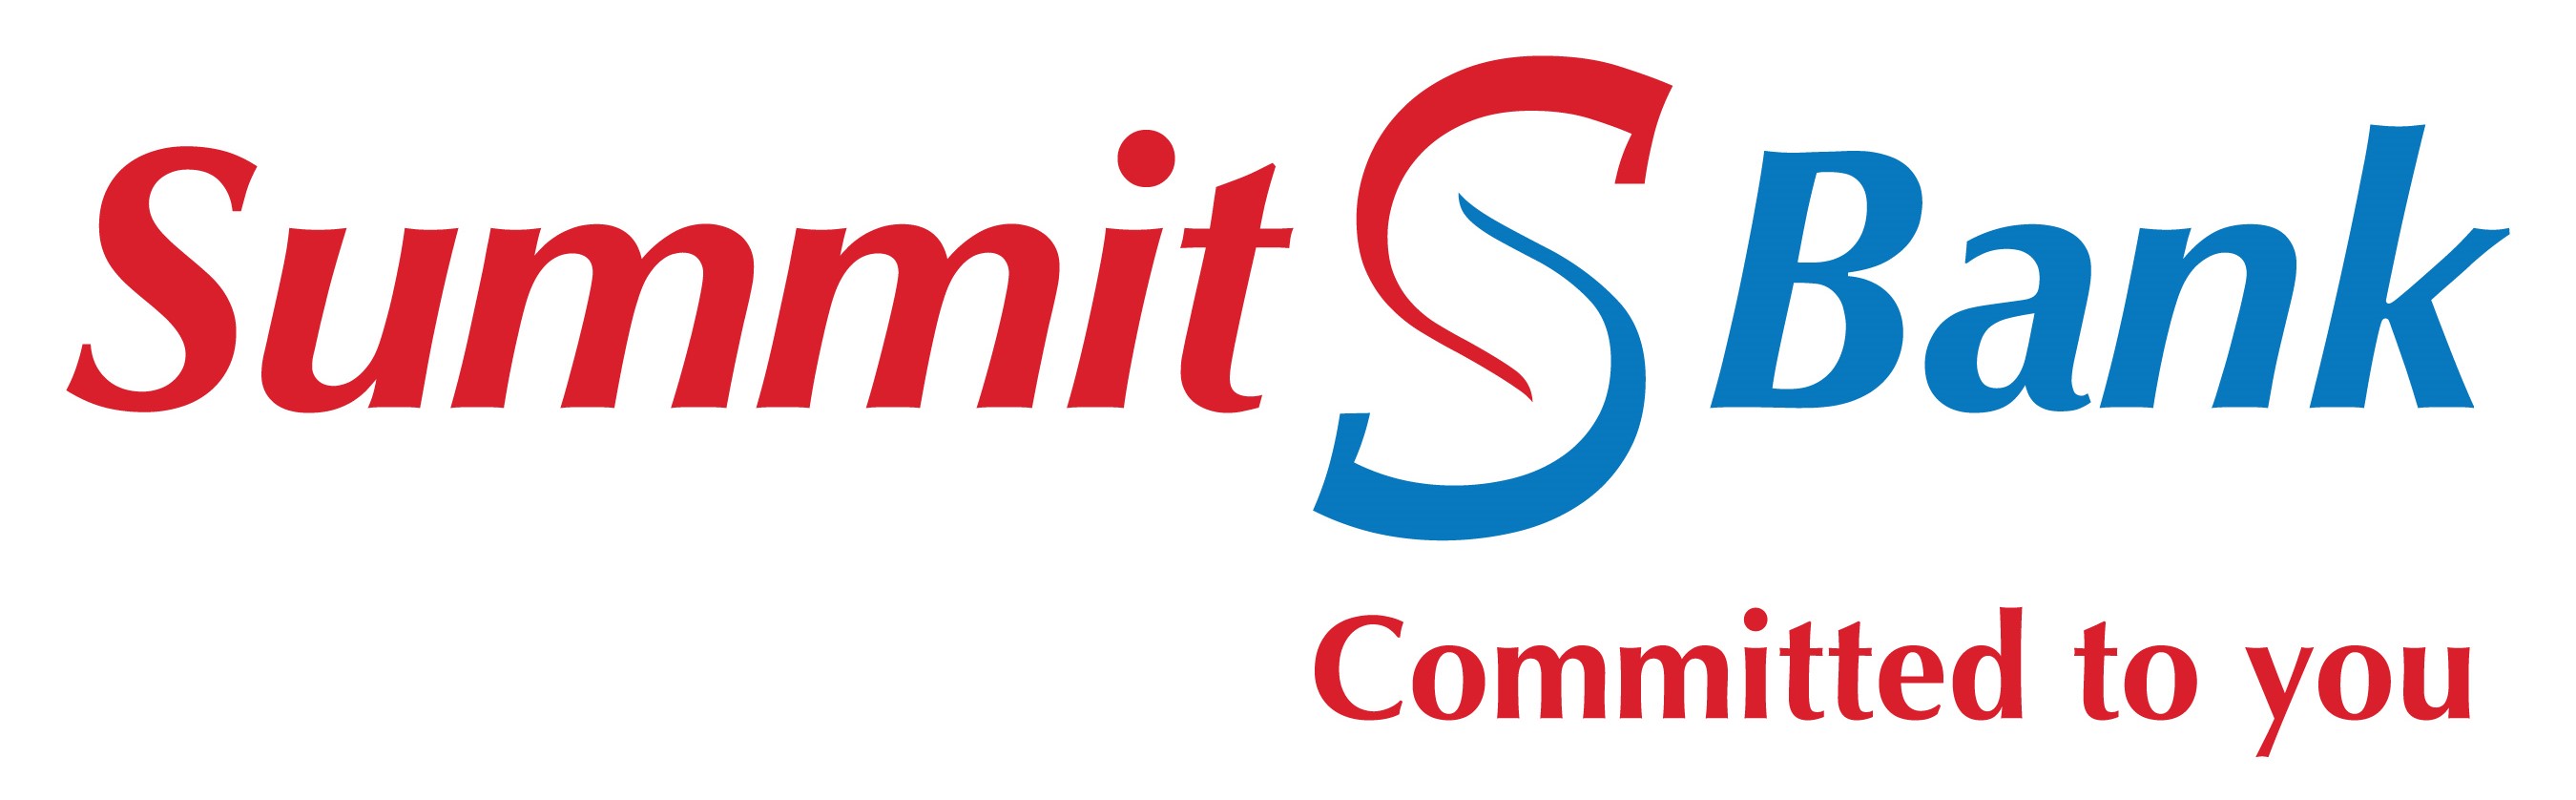 Summit Bank Limited Jobs